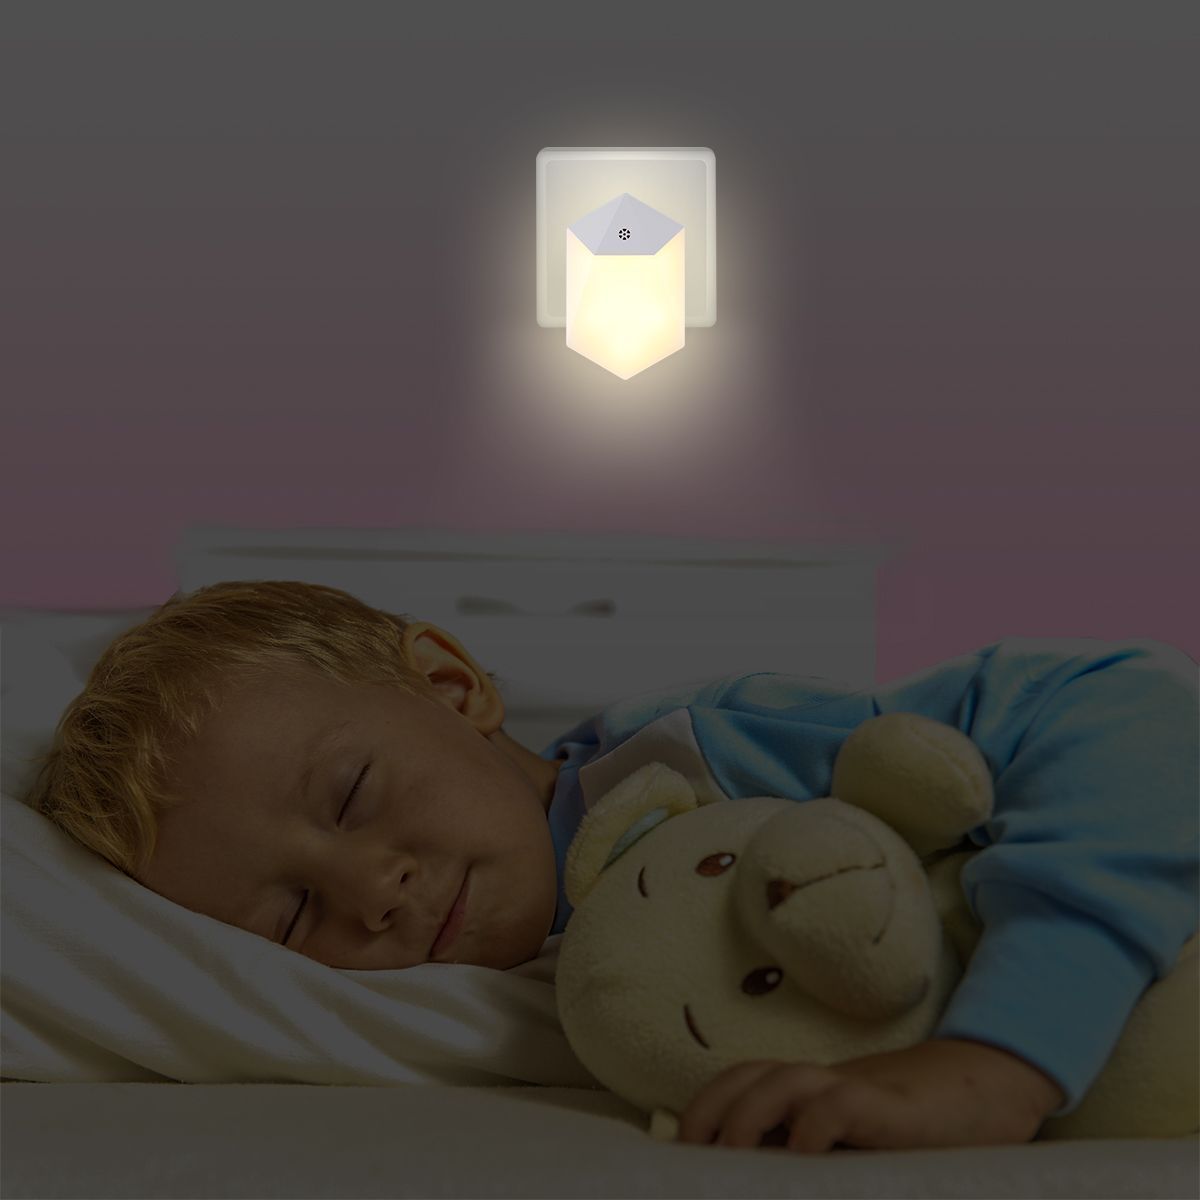 05W-6-LED-Light-controlled-Night-Light-Wall-Hallway-Bathroom-Bedroom-Kid-Warm-White-Lamp-AC110-240V-1532642